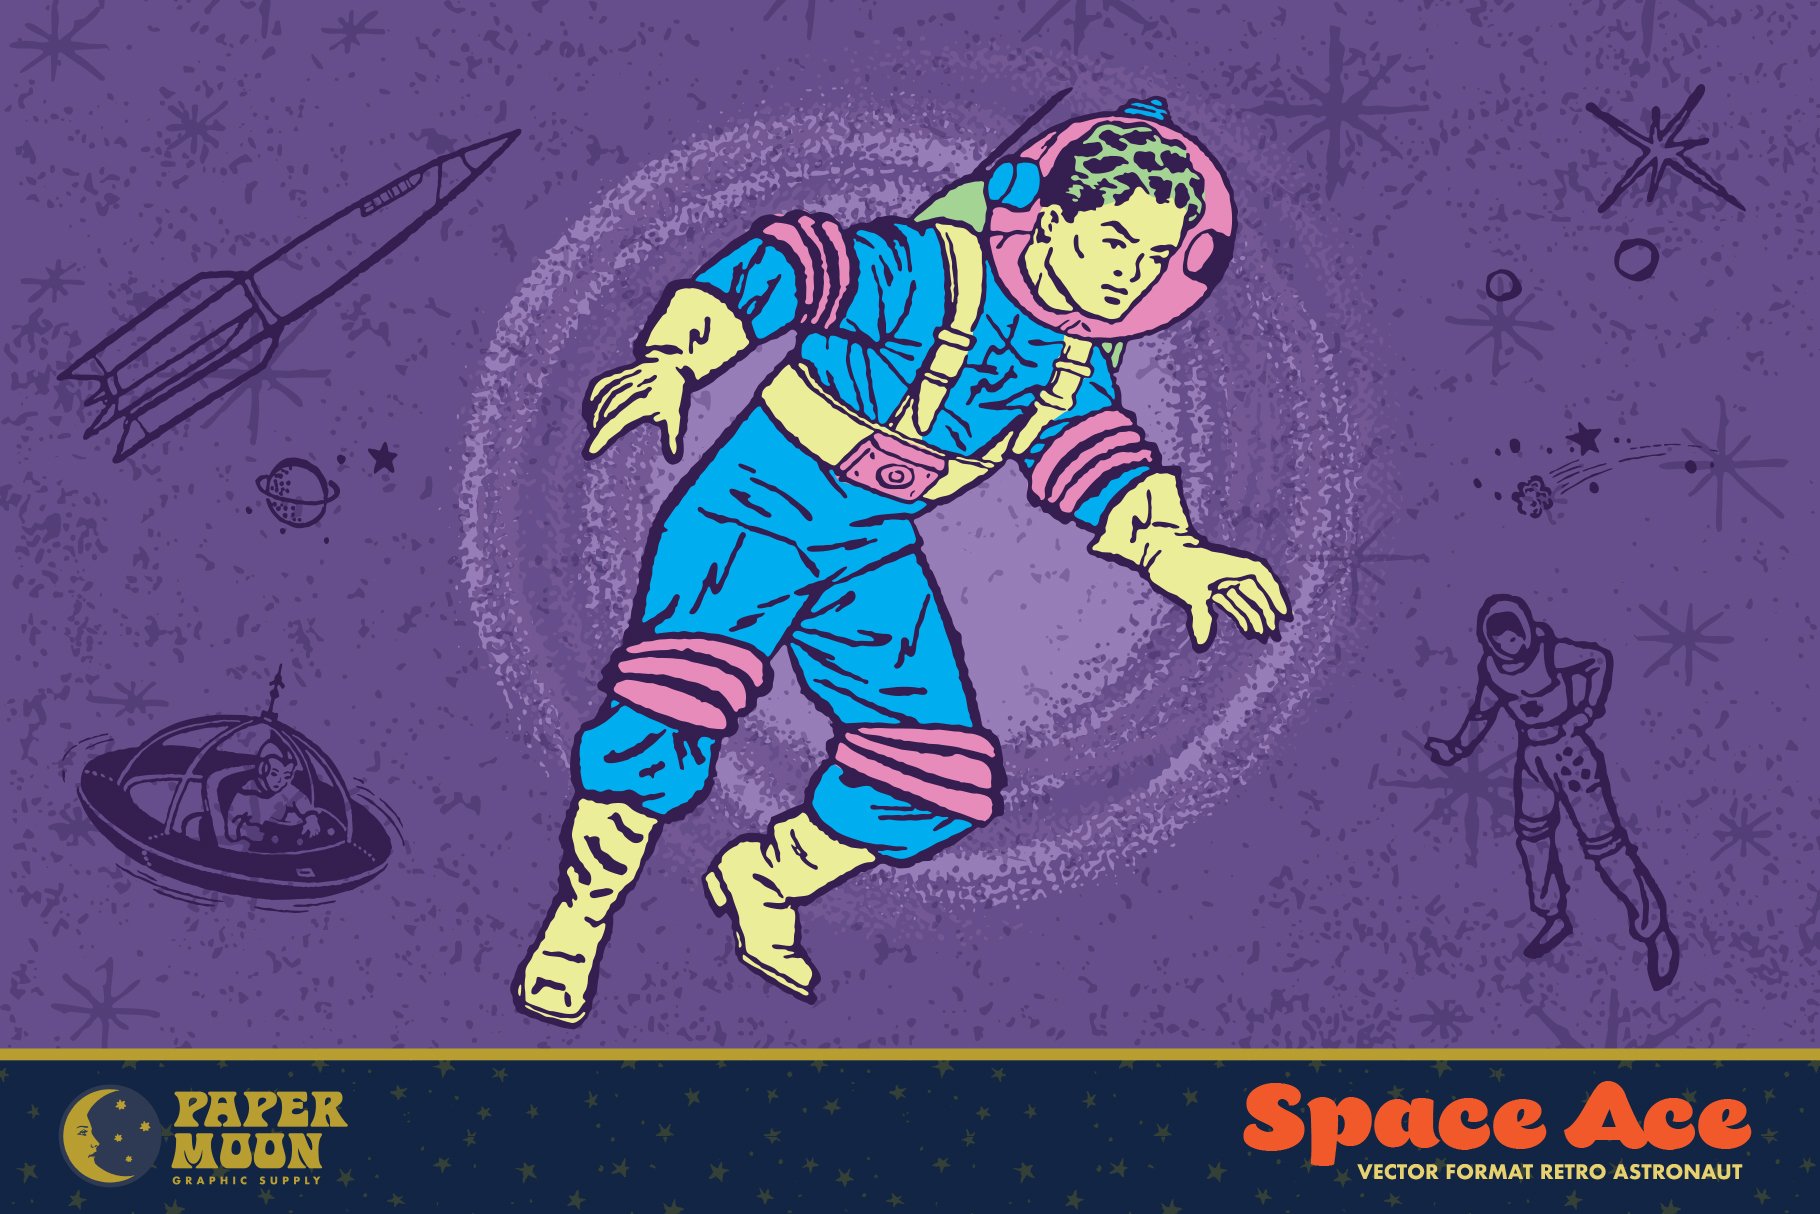 Space Ace - Retro Astronaut cover image.